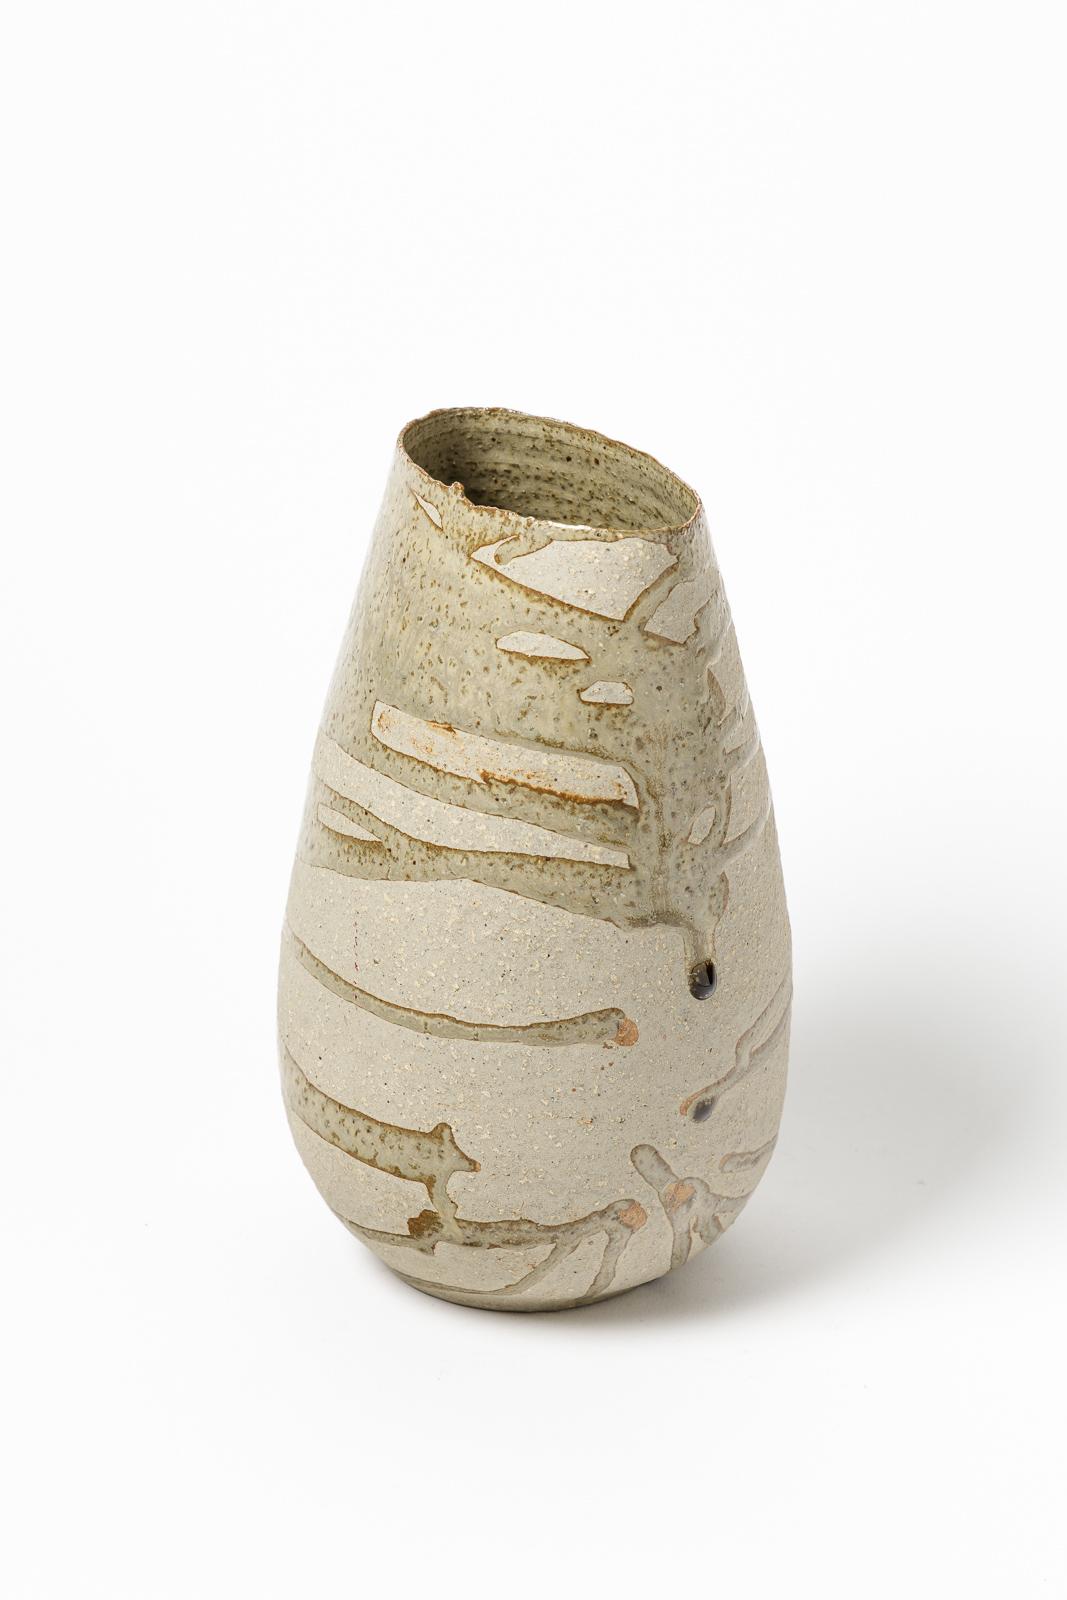 Mid-Century Modern Grey Abstract Stoneware Ceramic Vase circa 1970 by Jacques Lacheny 20th Century